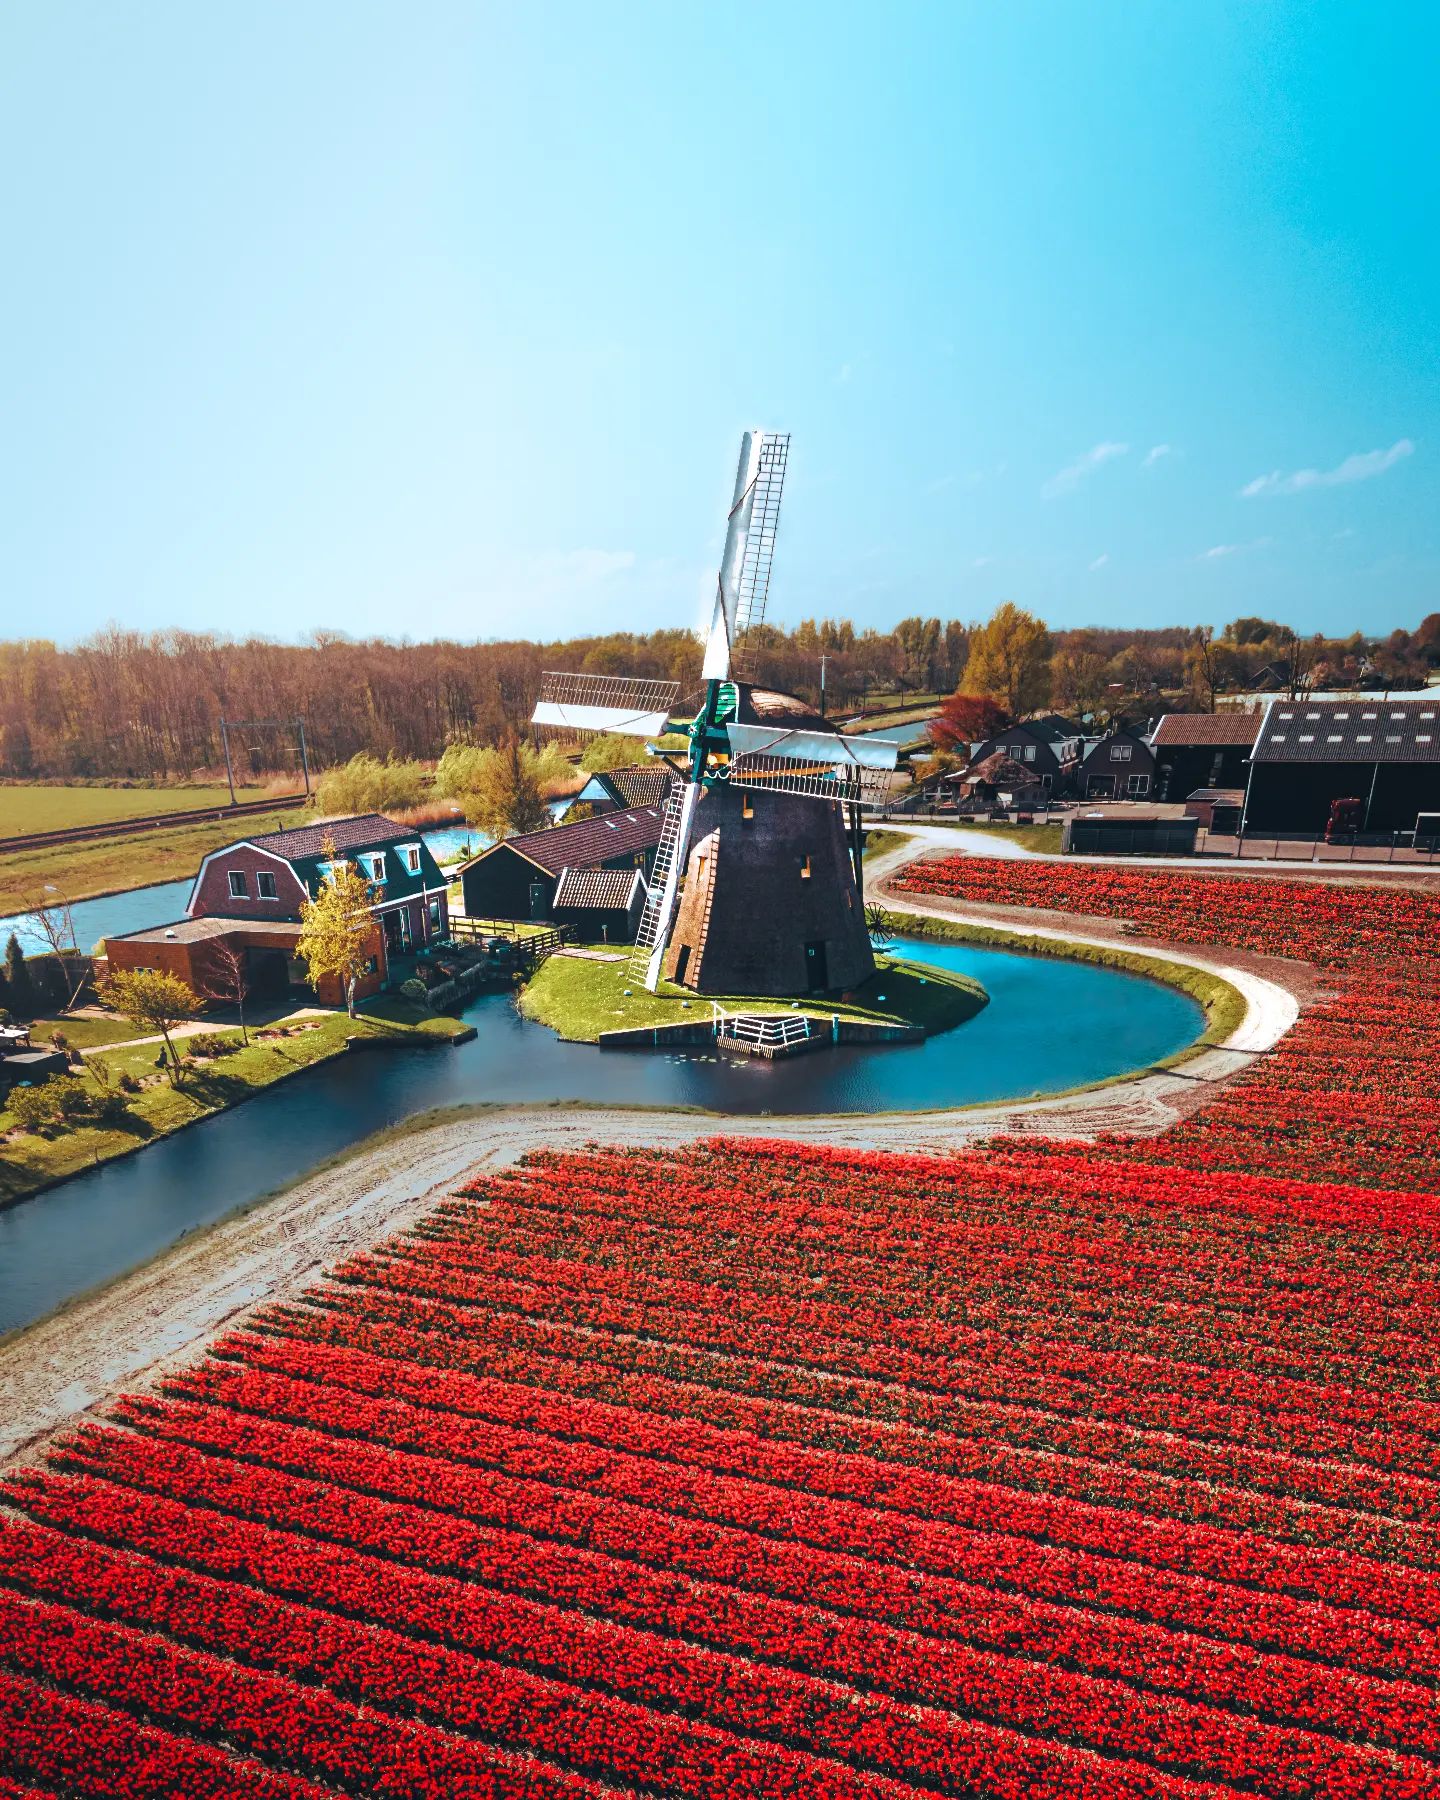 The tulip season 😍🌷 🇳🇱.
.
.
.
#thenetherlands🇳🇱 #djiglobal #windmills #dutchwindmill #flowerfields #tulipfields #tulipseason #visitnetherlands #droneglobe #dronephotography #djimavicair2 #nederland_ontdekt #dronepilot #skybangerz #windmolen #tulpenvelden #dronefotografie